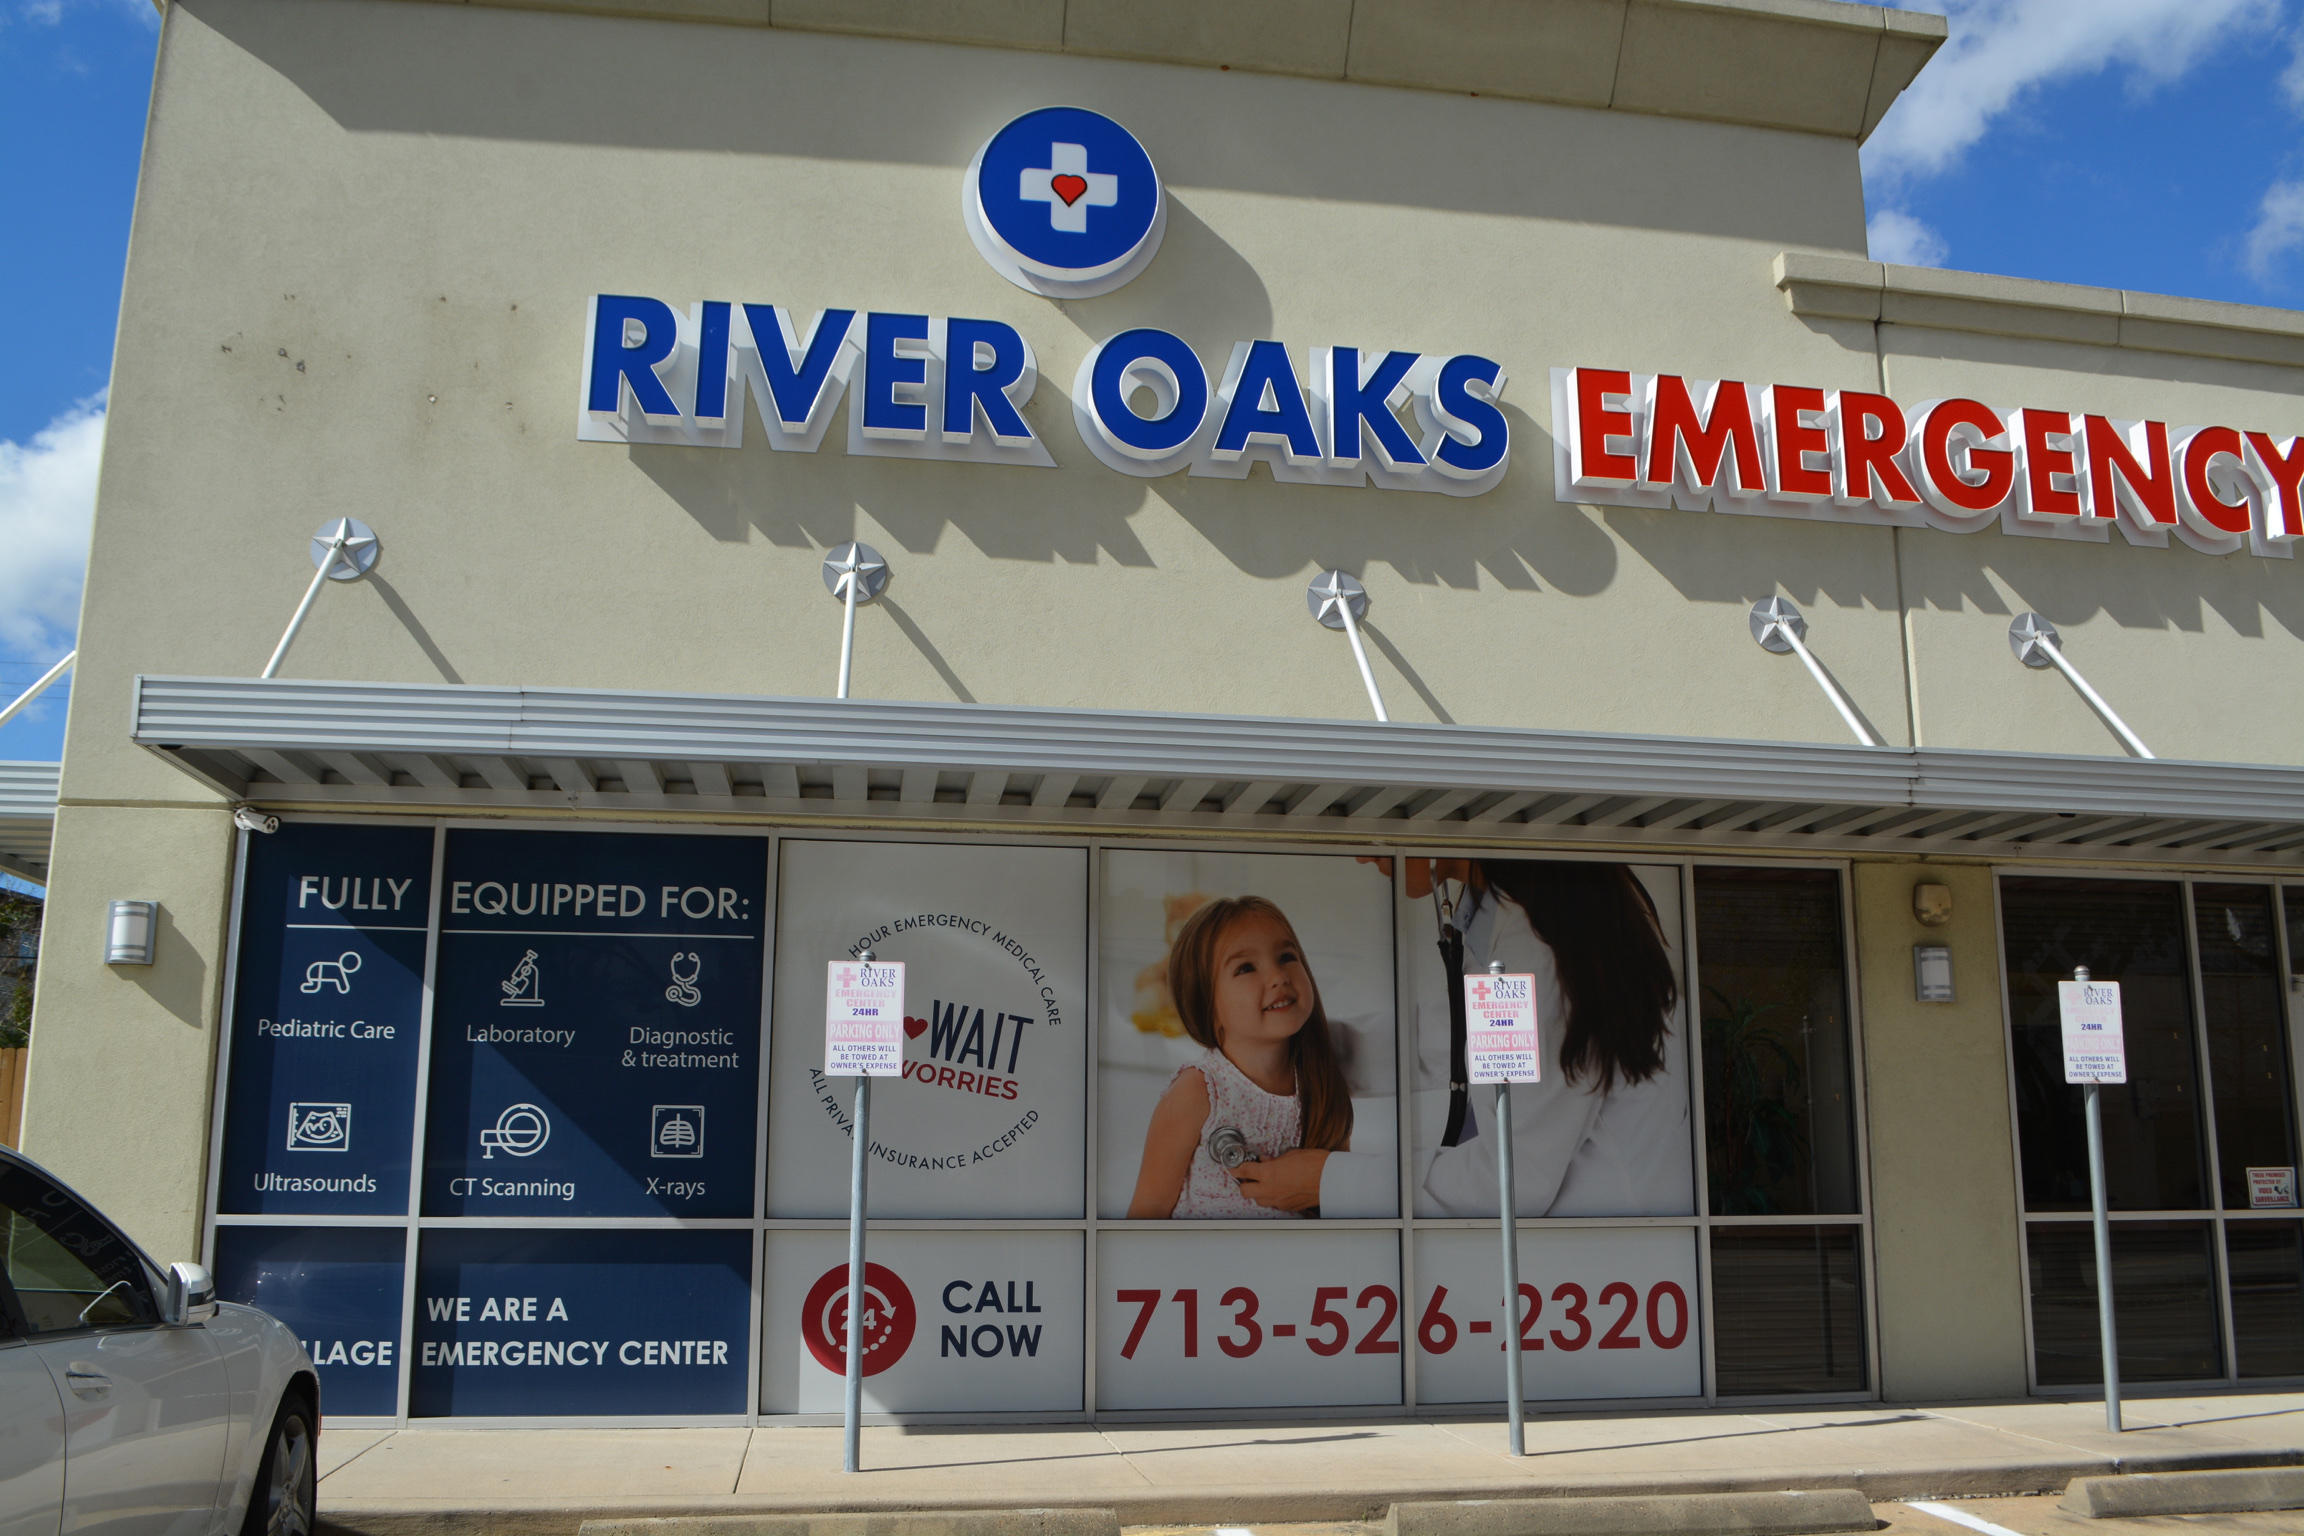 River Oaks Emergency Room - A Village Emergency Center Photo